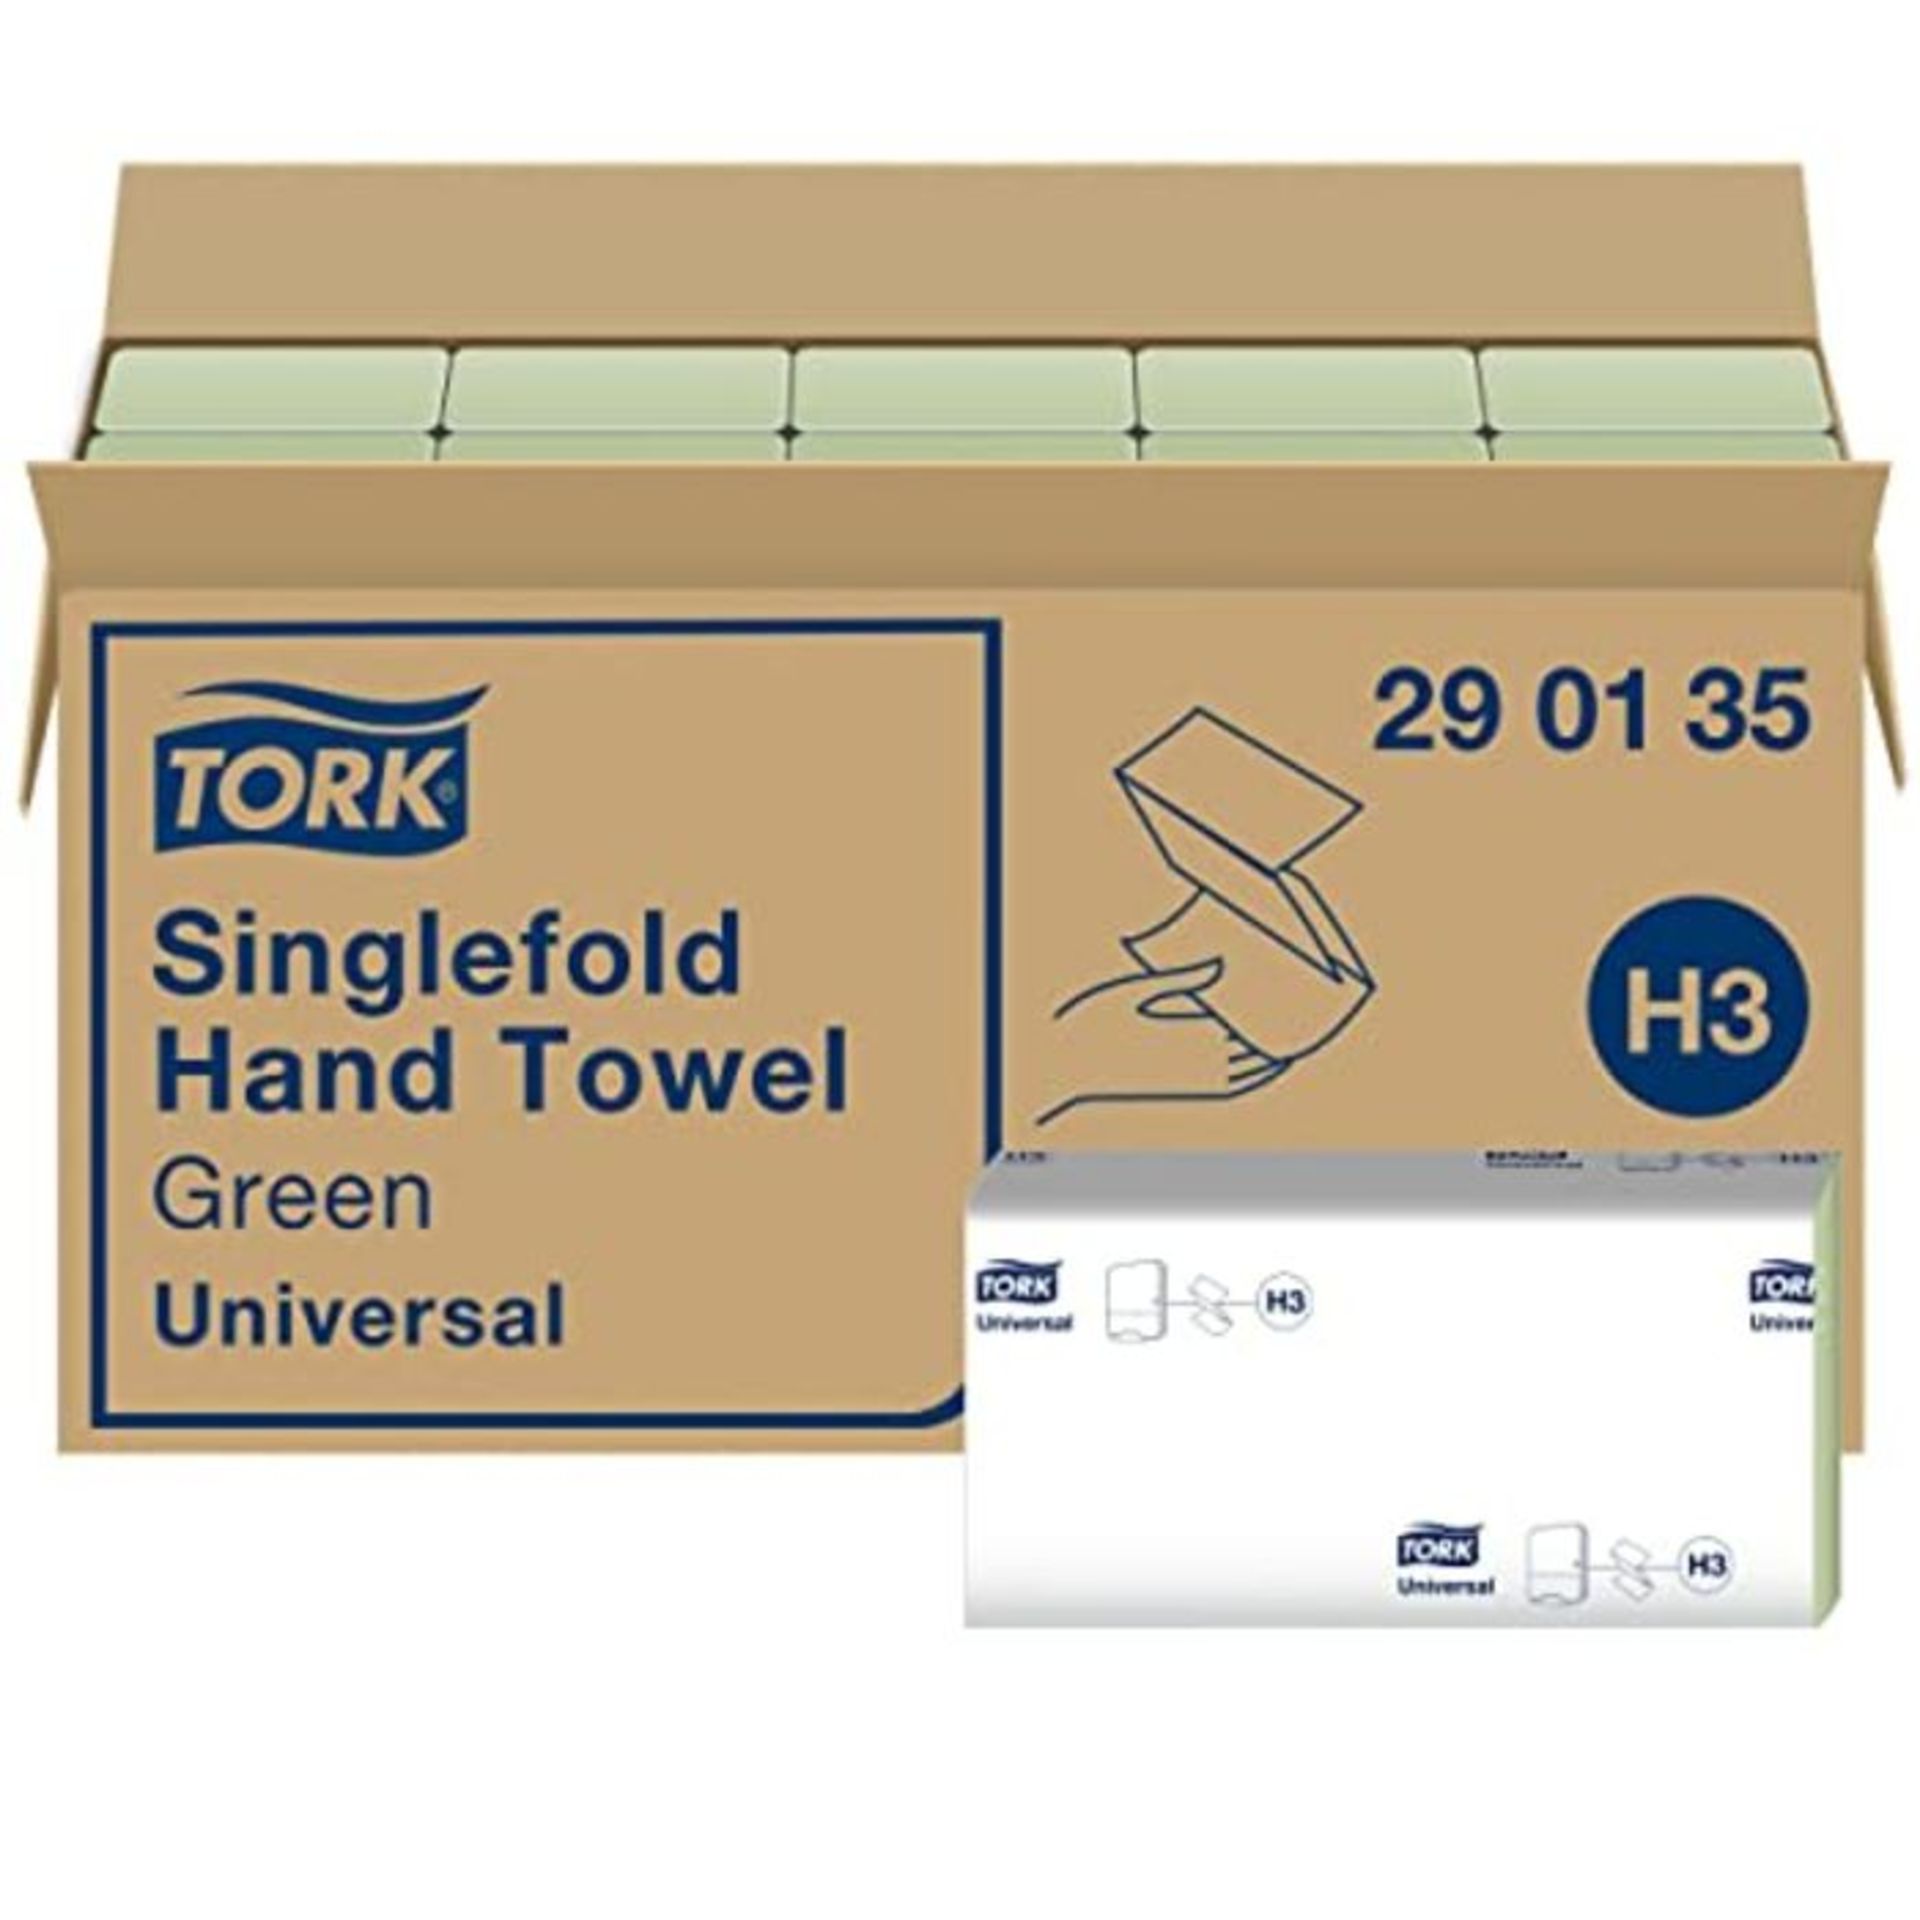 Tork Green Singlefold Hand Towels 290135 - H3 Universal Folded Paper Towels for Single